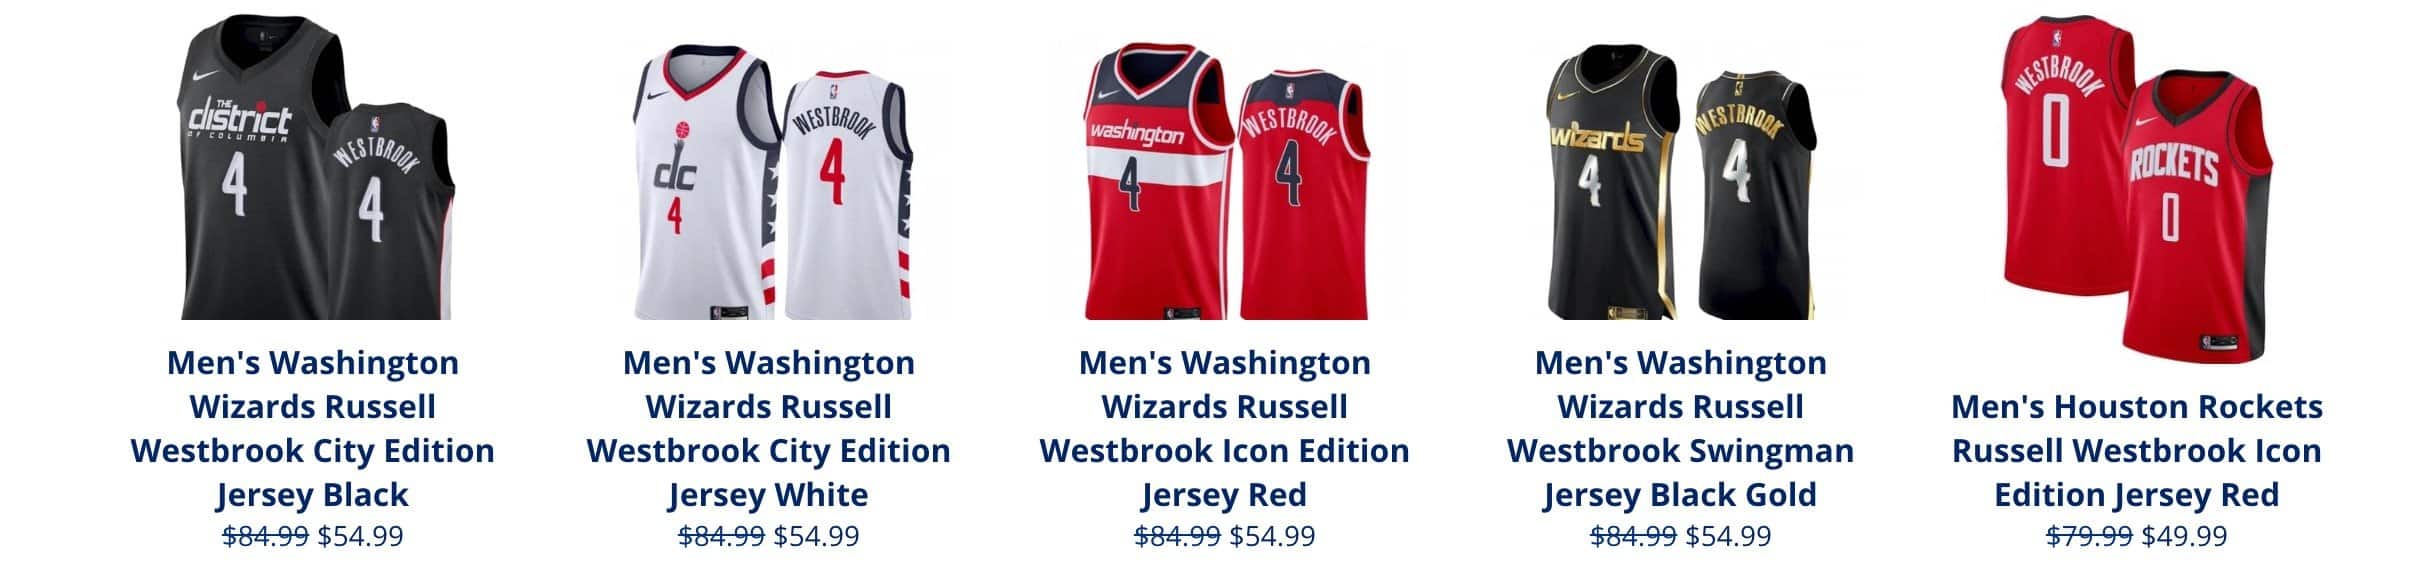 NBA_ 1 John Jersey Wall Ja 12 Morant Jerseys Mens Russell 4 Westbrook  Basketball Blue Red Black White stitched''nba''Jerseys 